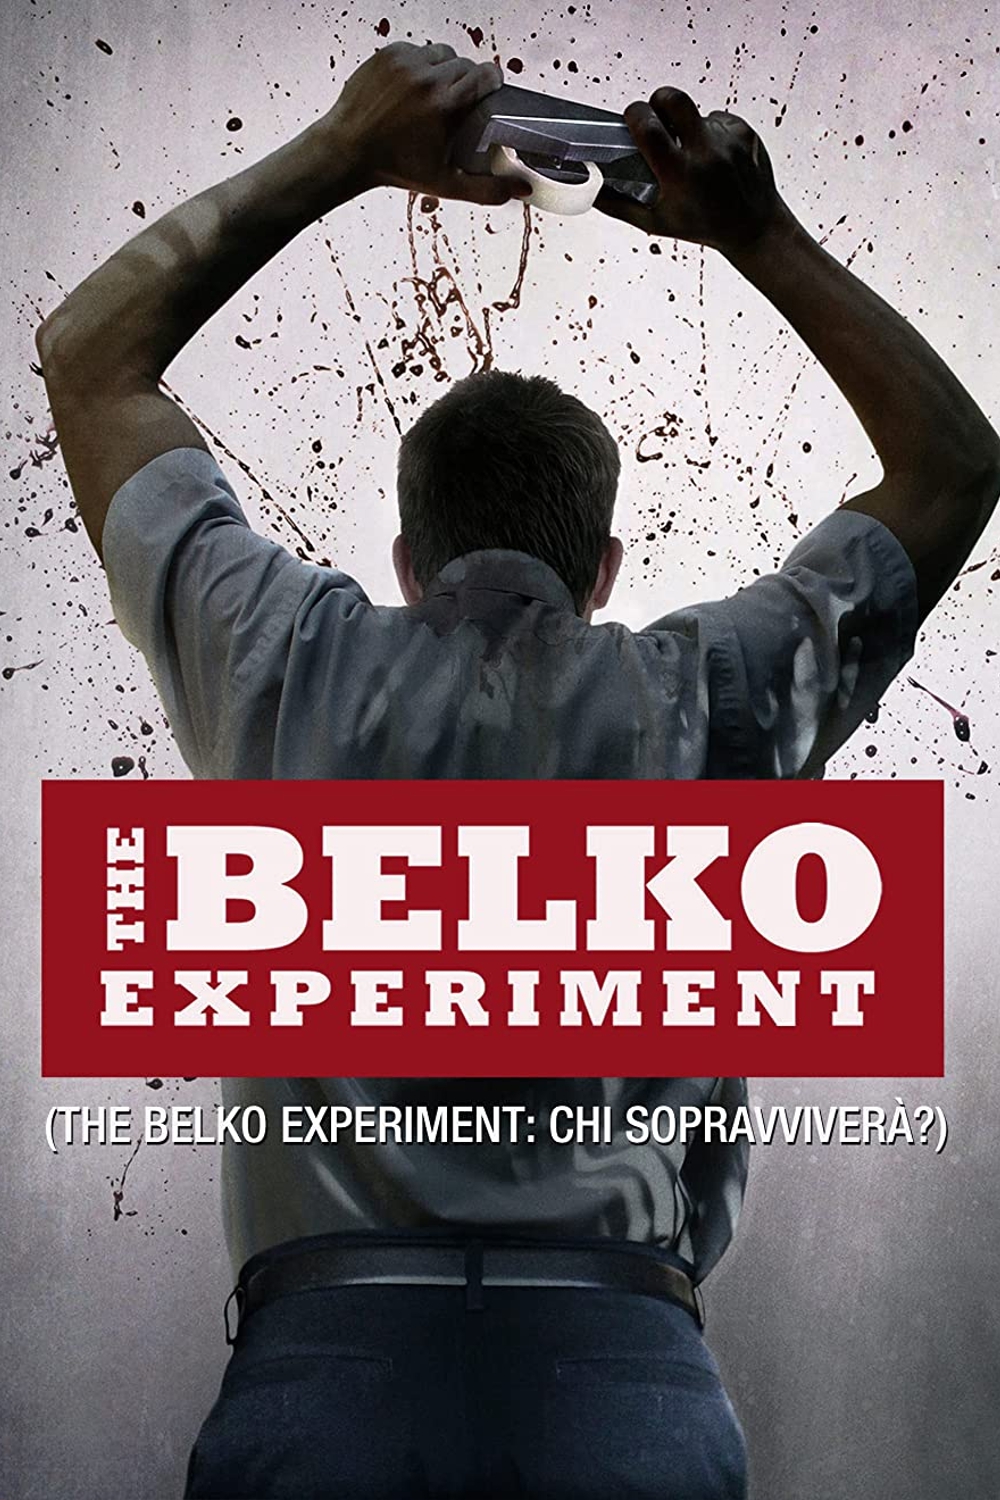 The Belko Experiment – Chi sopravviverà? [HD] (2017)